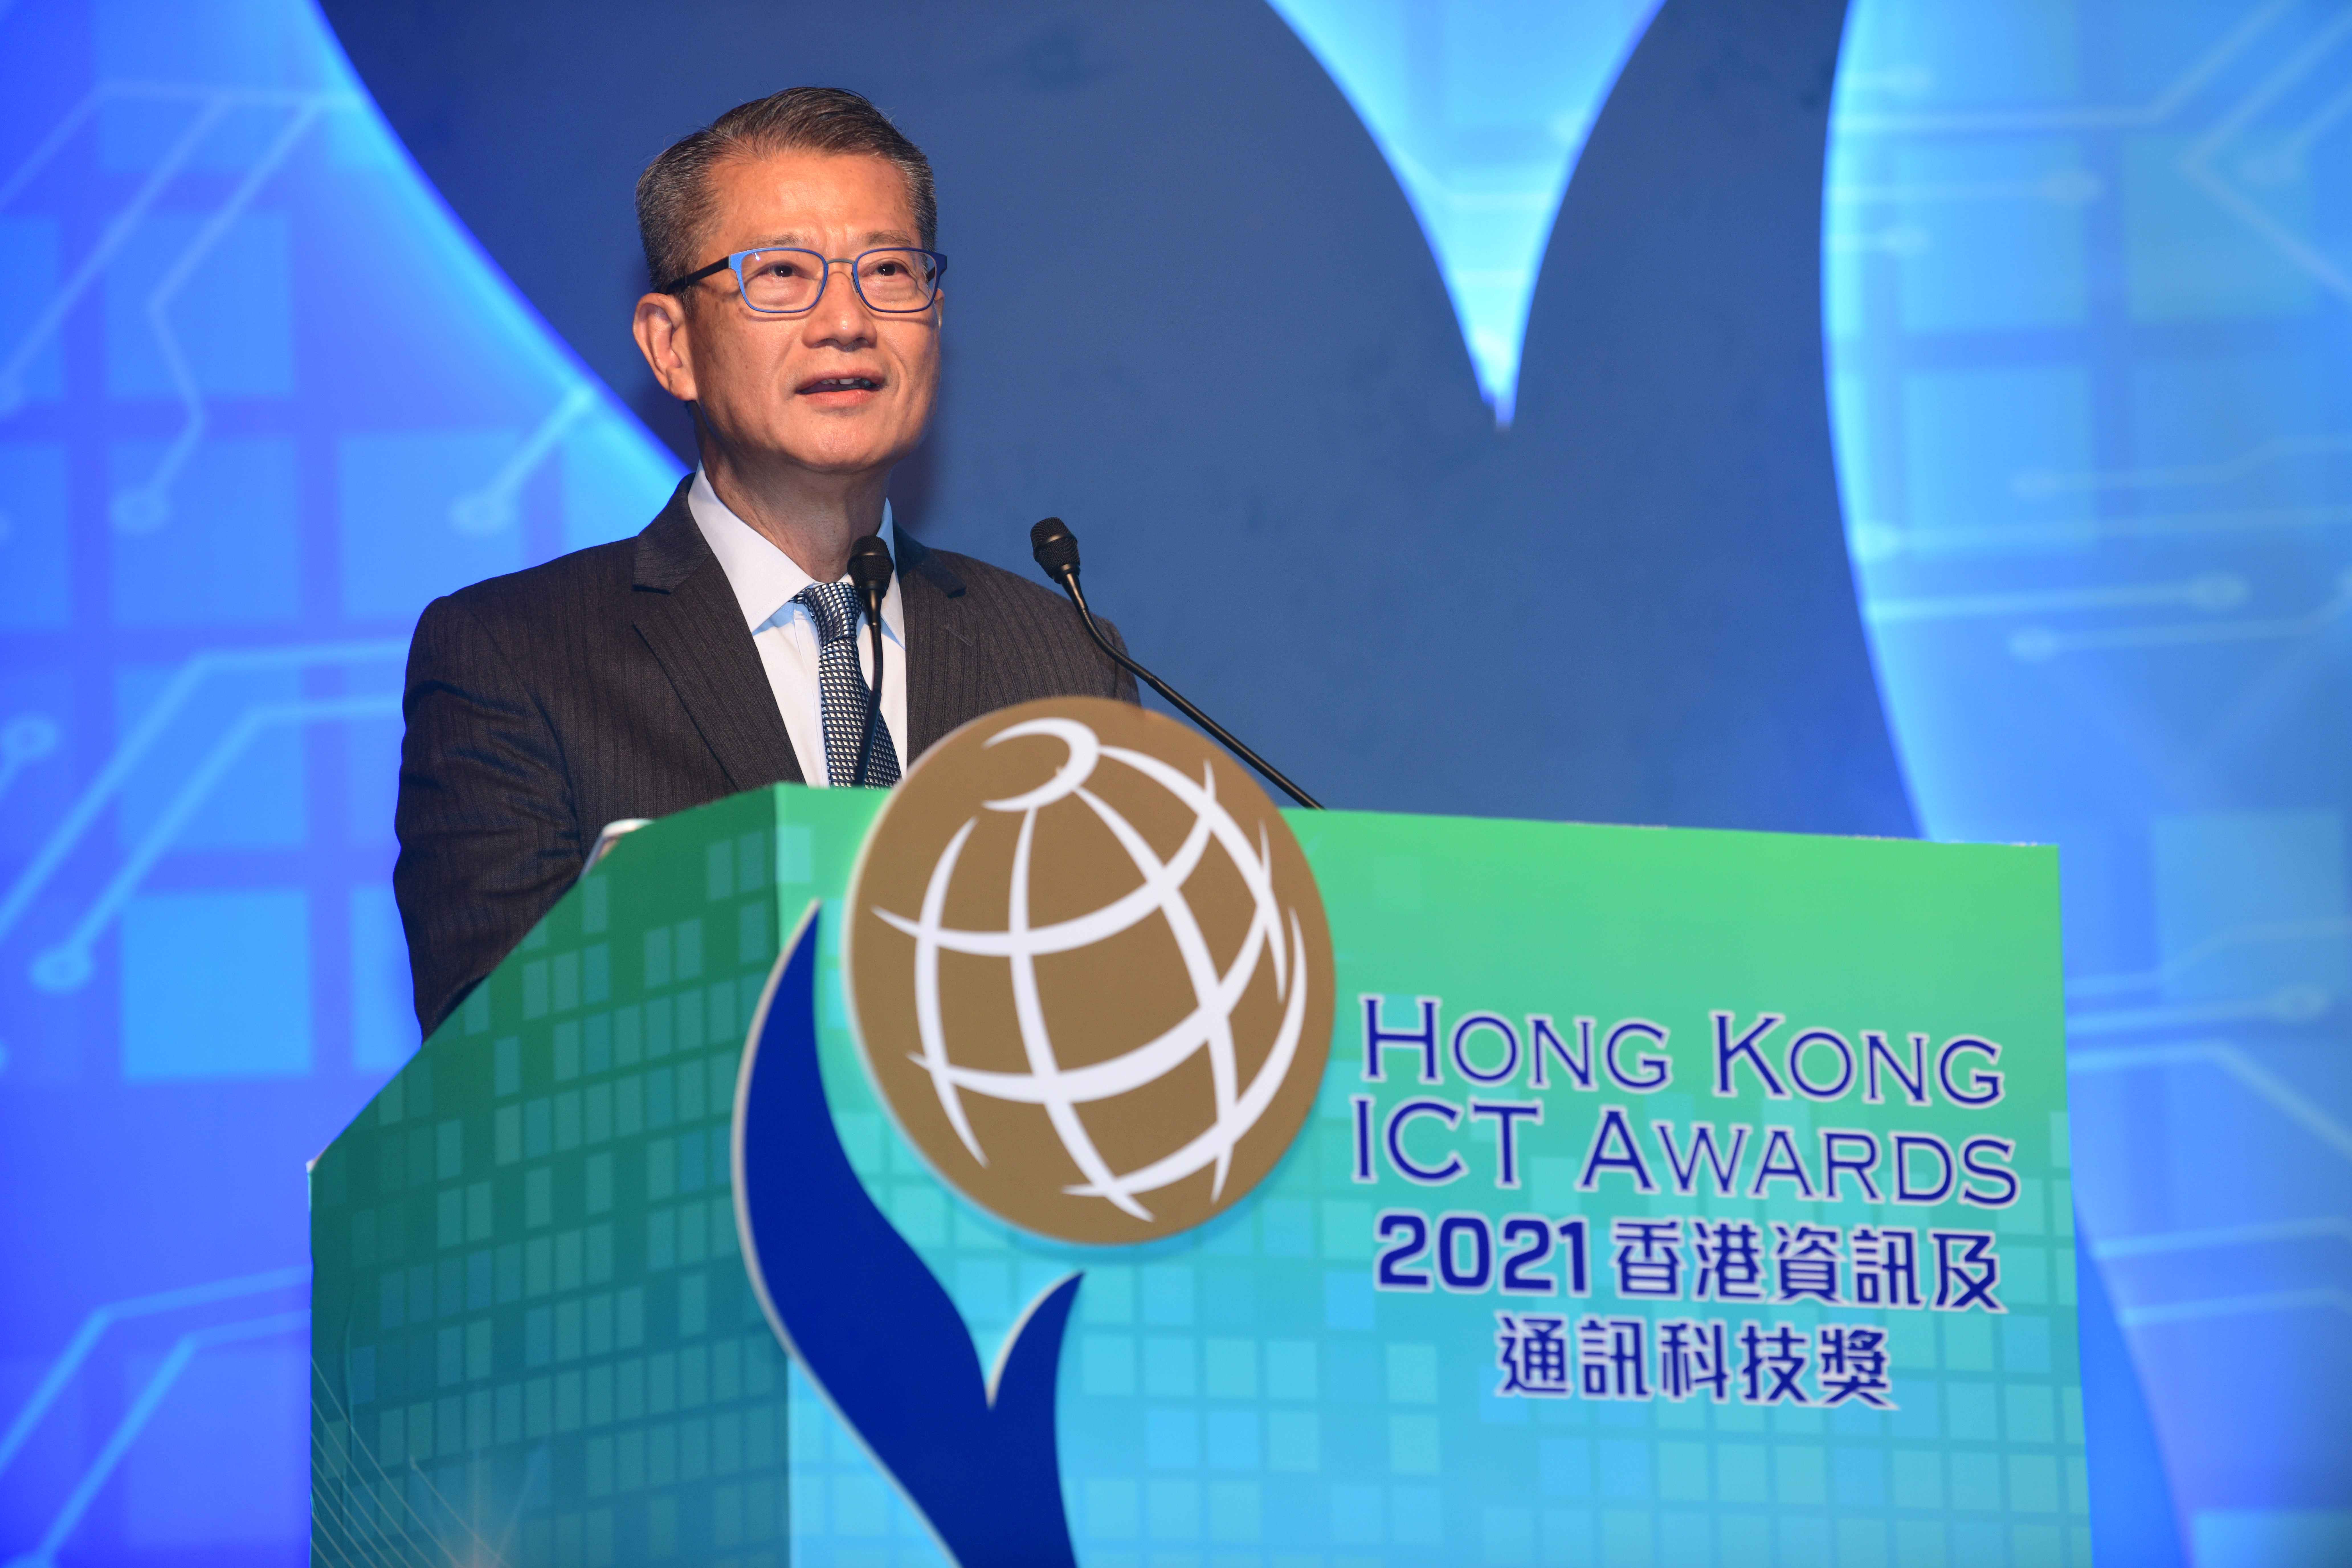 Speech at Hong Kong ICT Awards 2021 Awards Presentation Ceremony